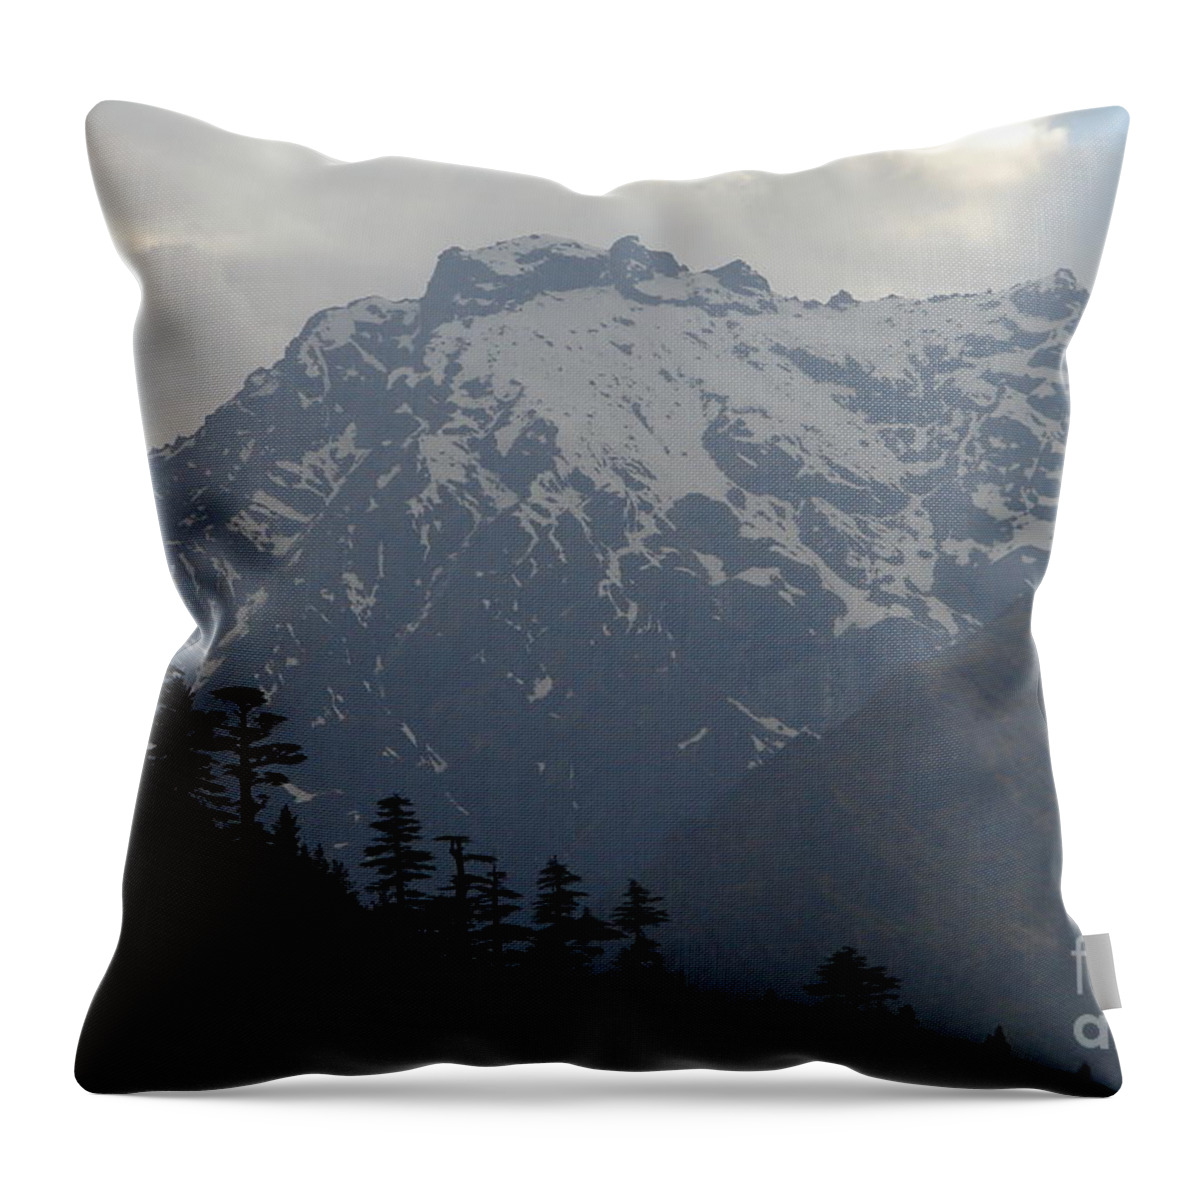 Mountains Throw Pillow featuring the photograph Mountain profiles by Ken Kvamme